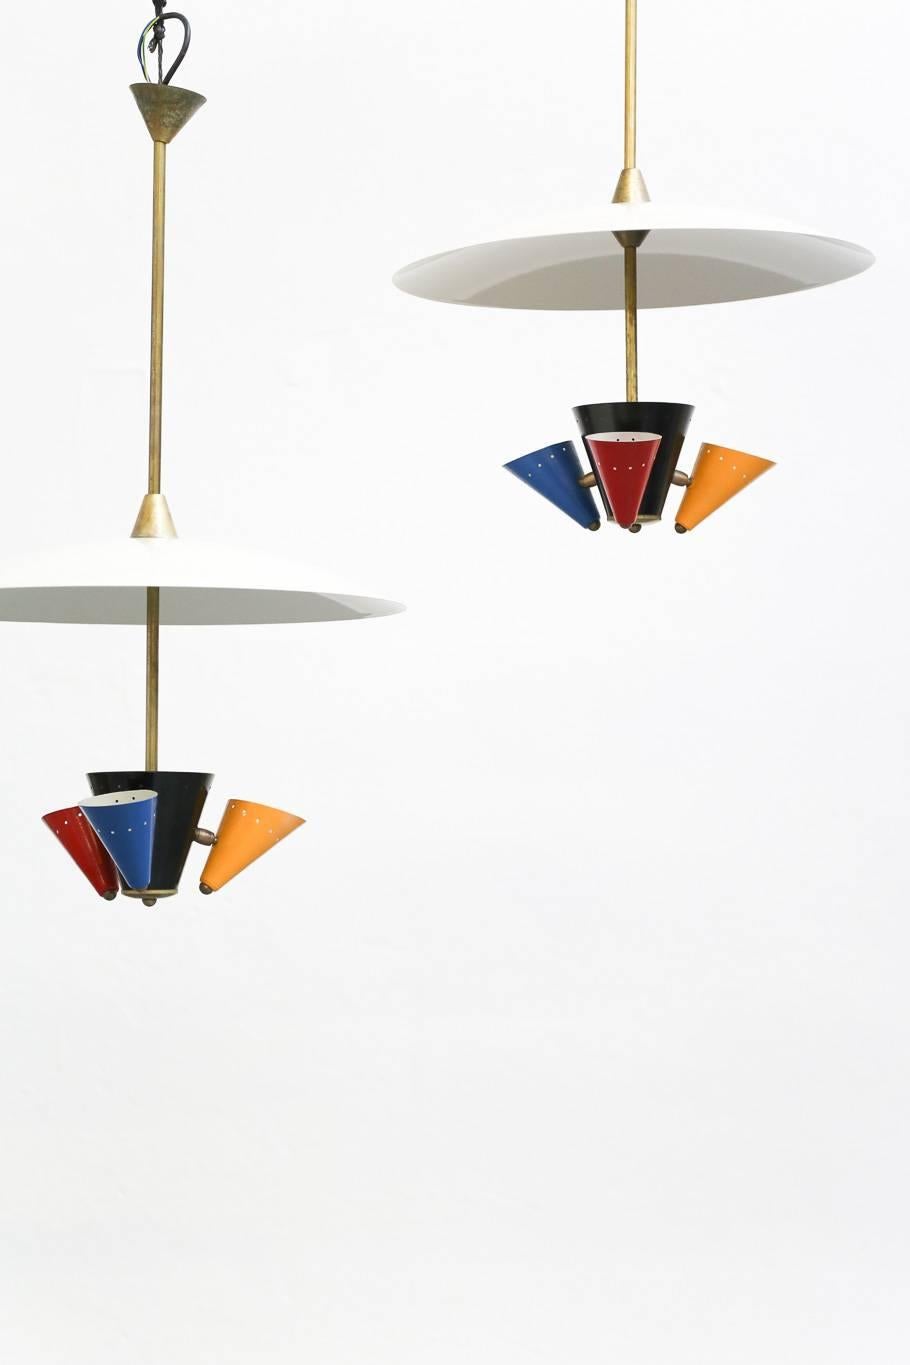 Mid-Century Modern Pendant Lamp in the Style of Gino Sarfatti 1950s Stilnovo